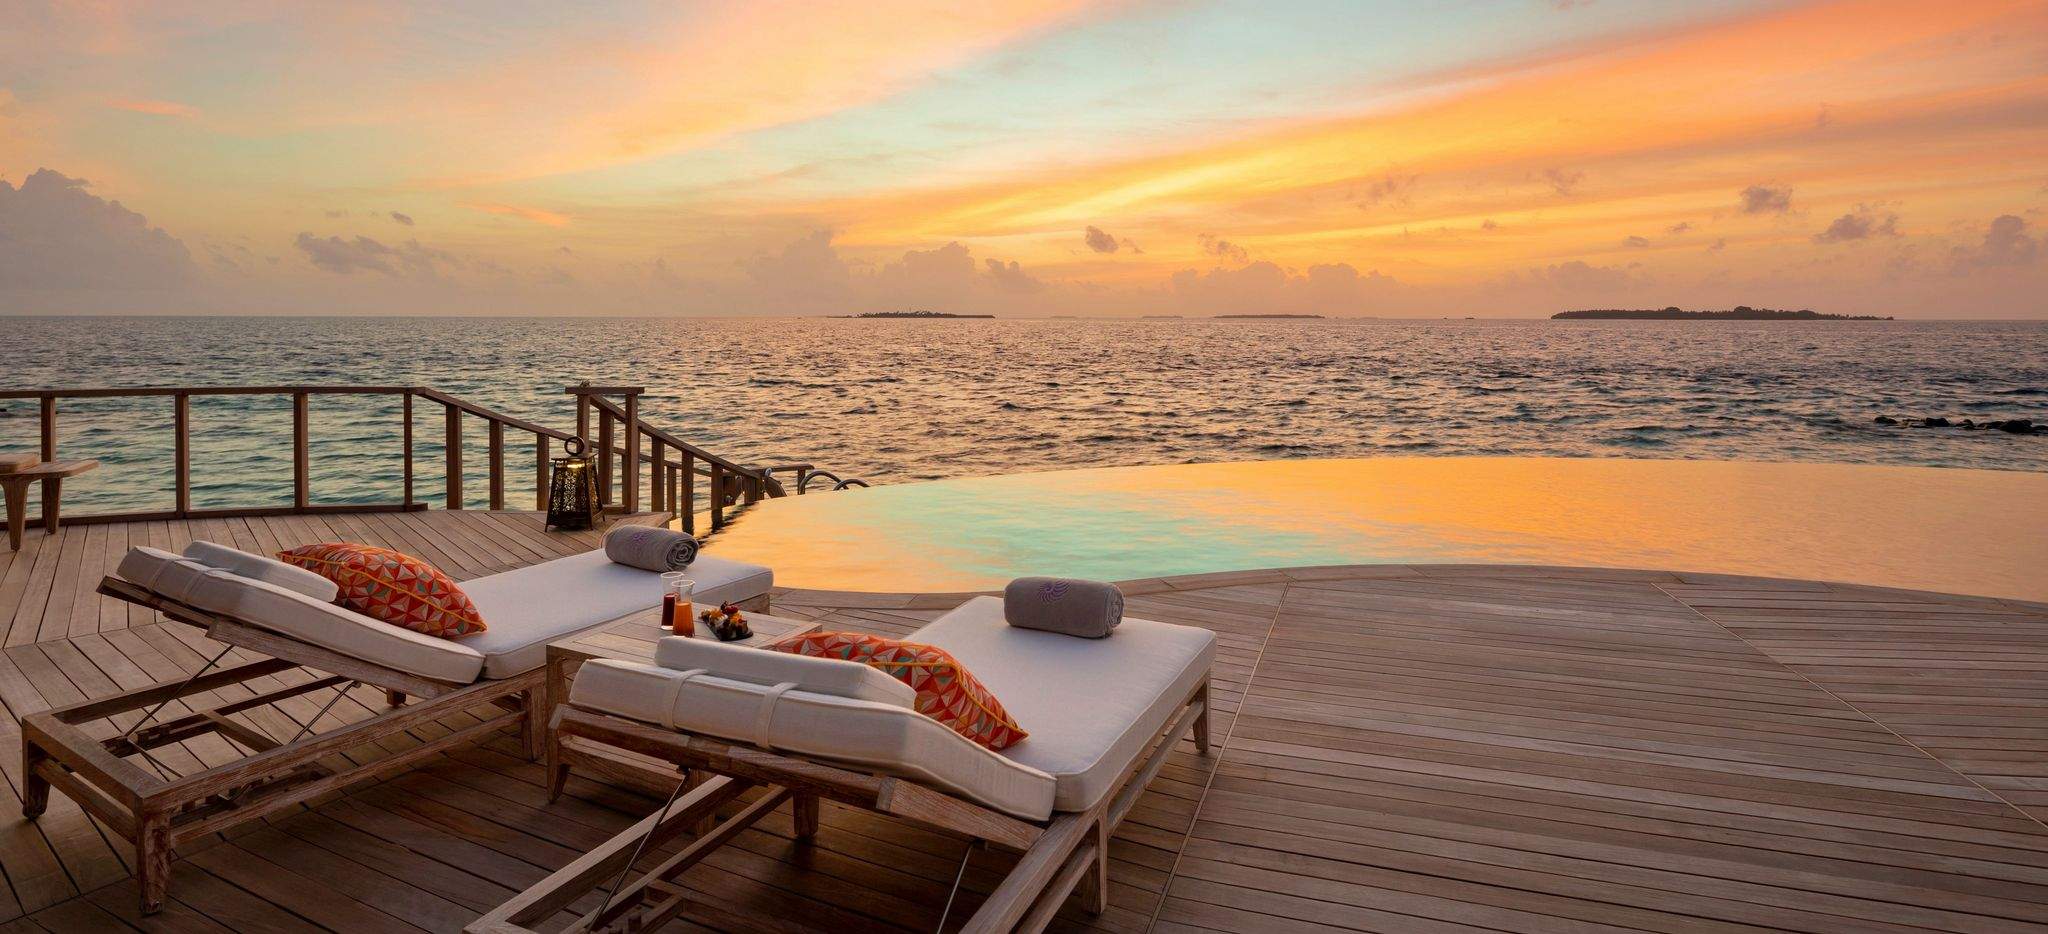 Privater Pool bei Sonnenuntergang, im Hotel Nautilus, Malediven